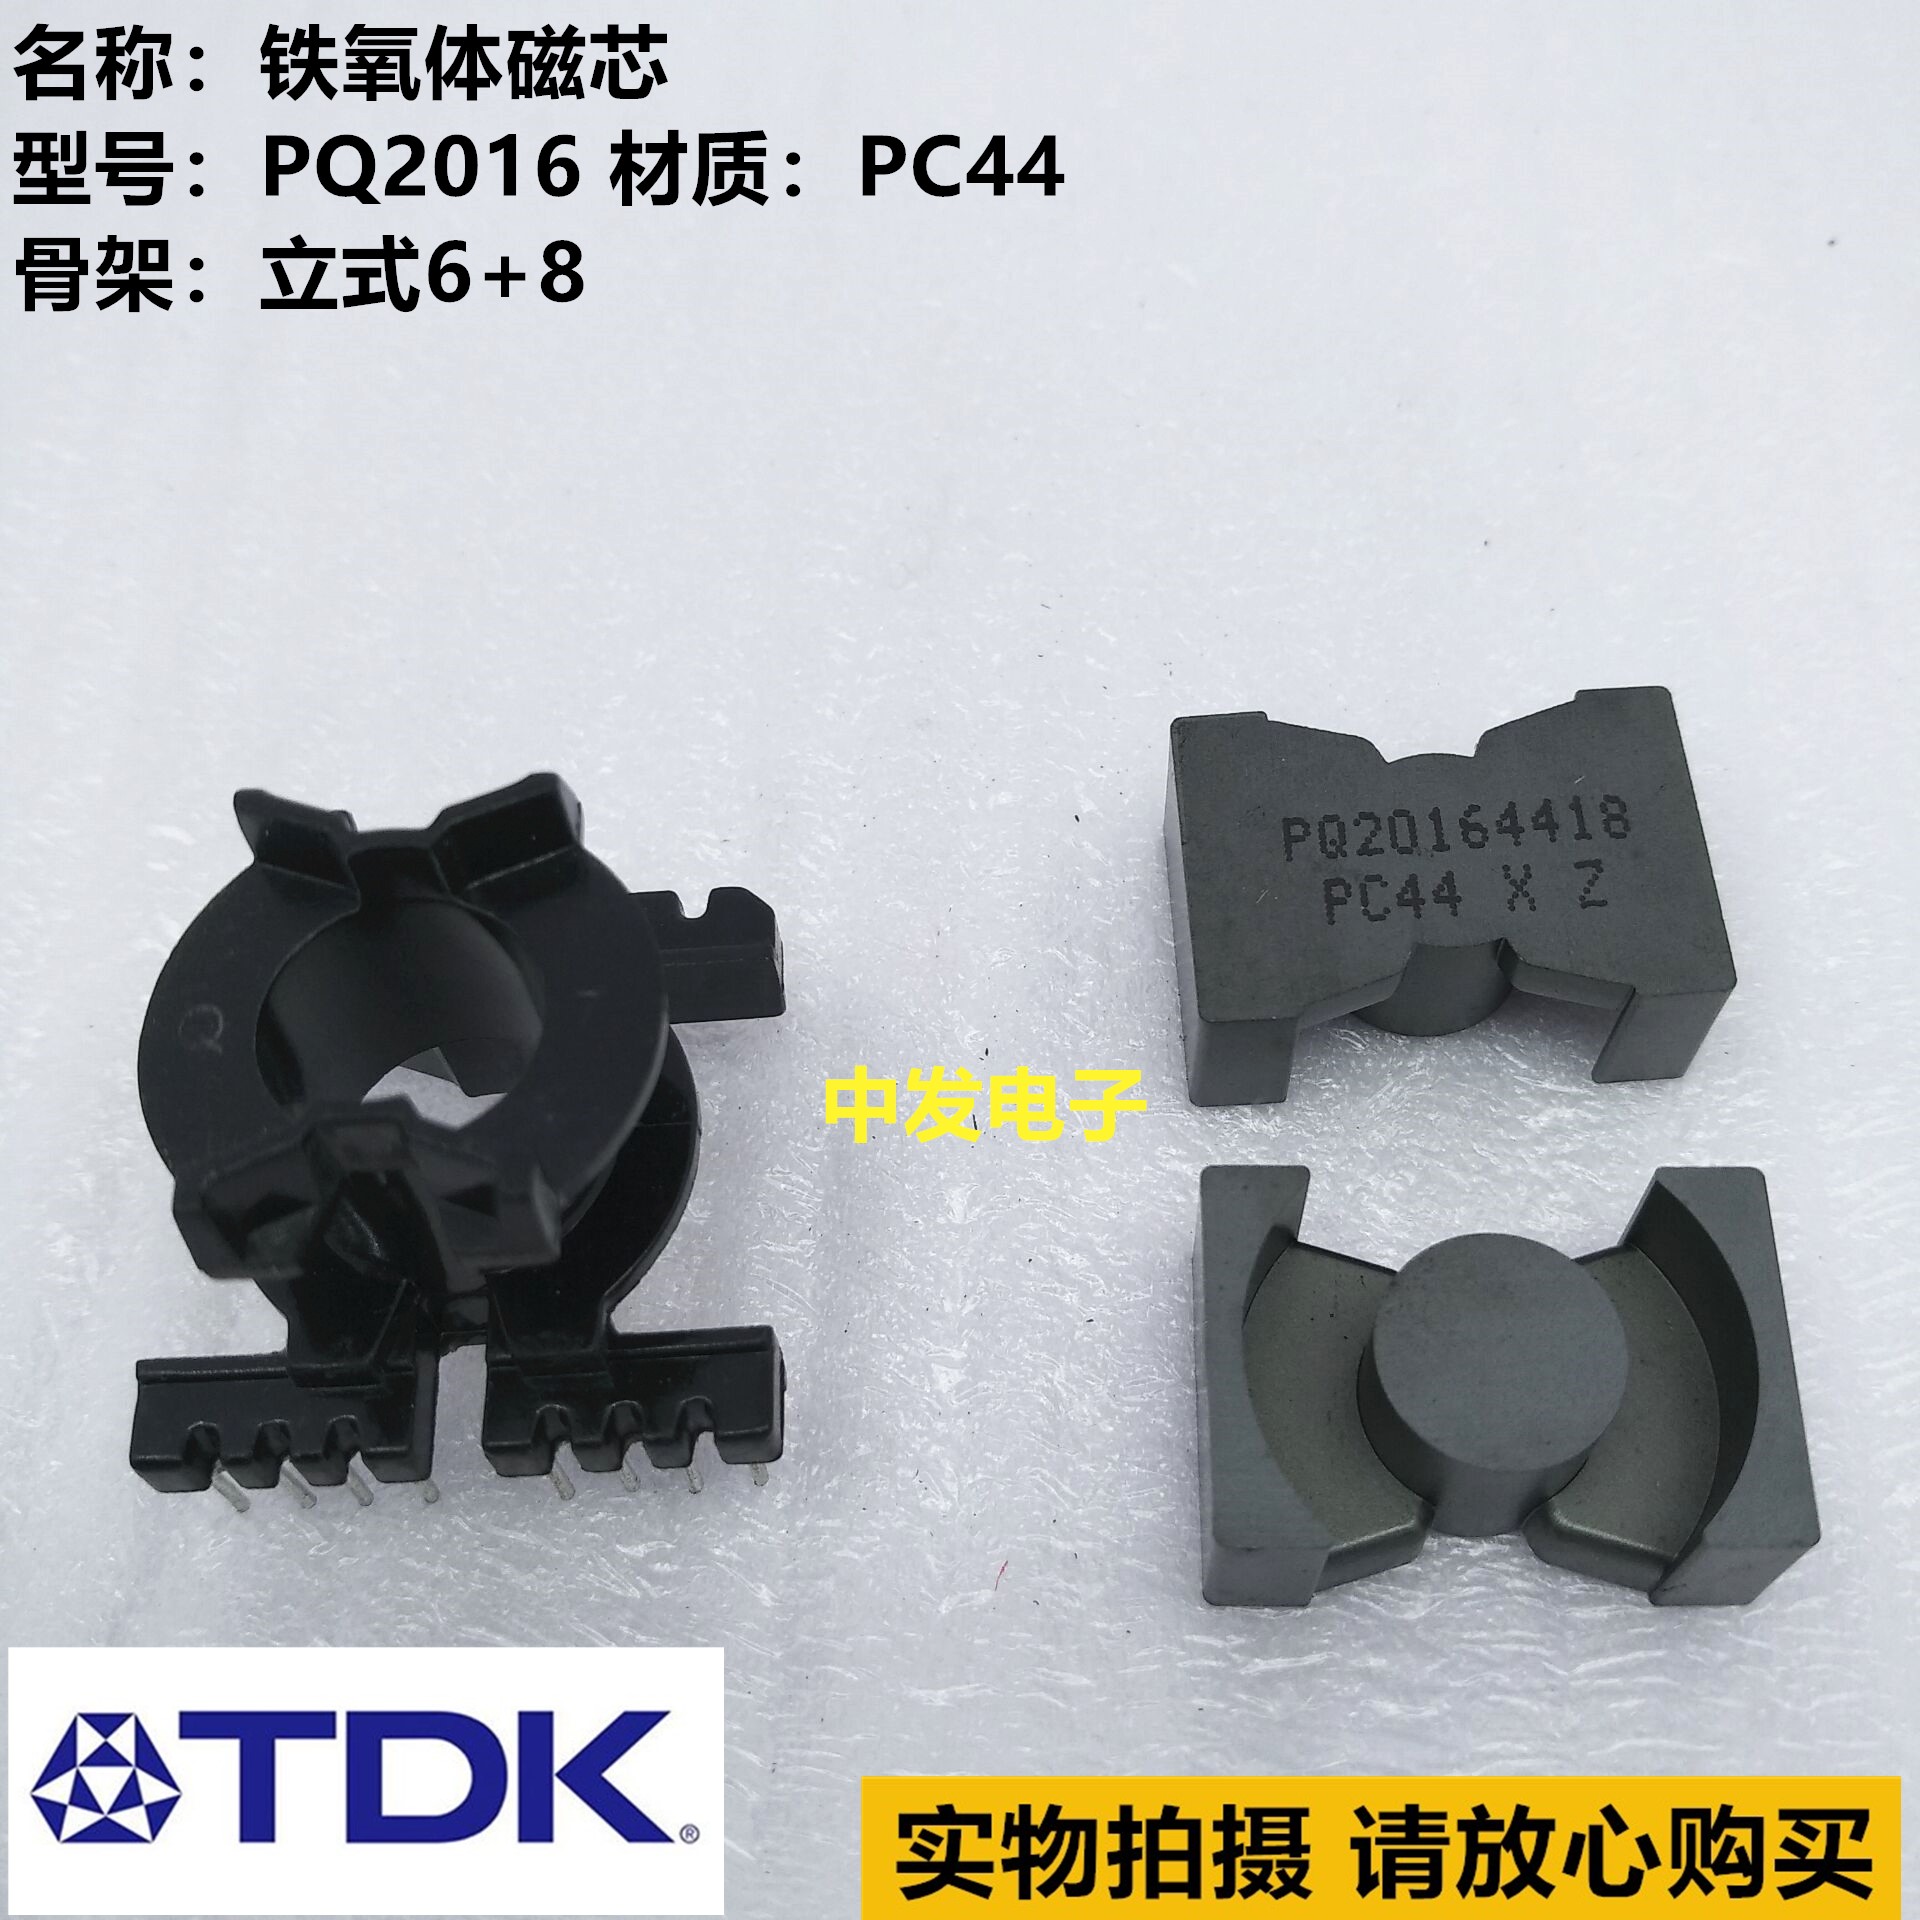 Original TDK PQ 2016 Imported Manganese Ferrite Core PC44 Vertical 6+8 Bakelite Framework